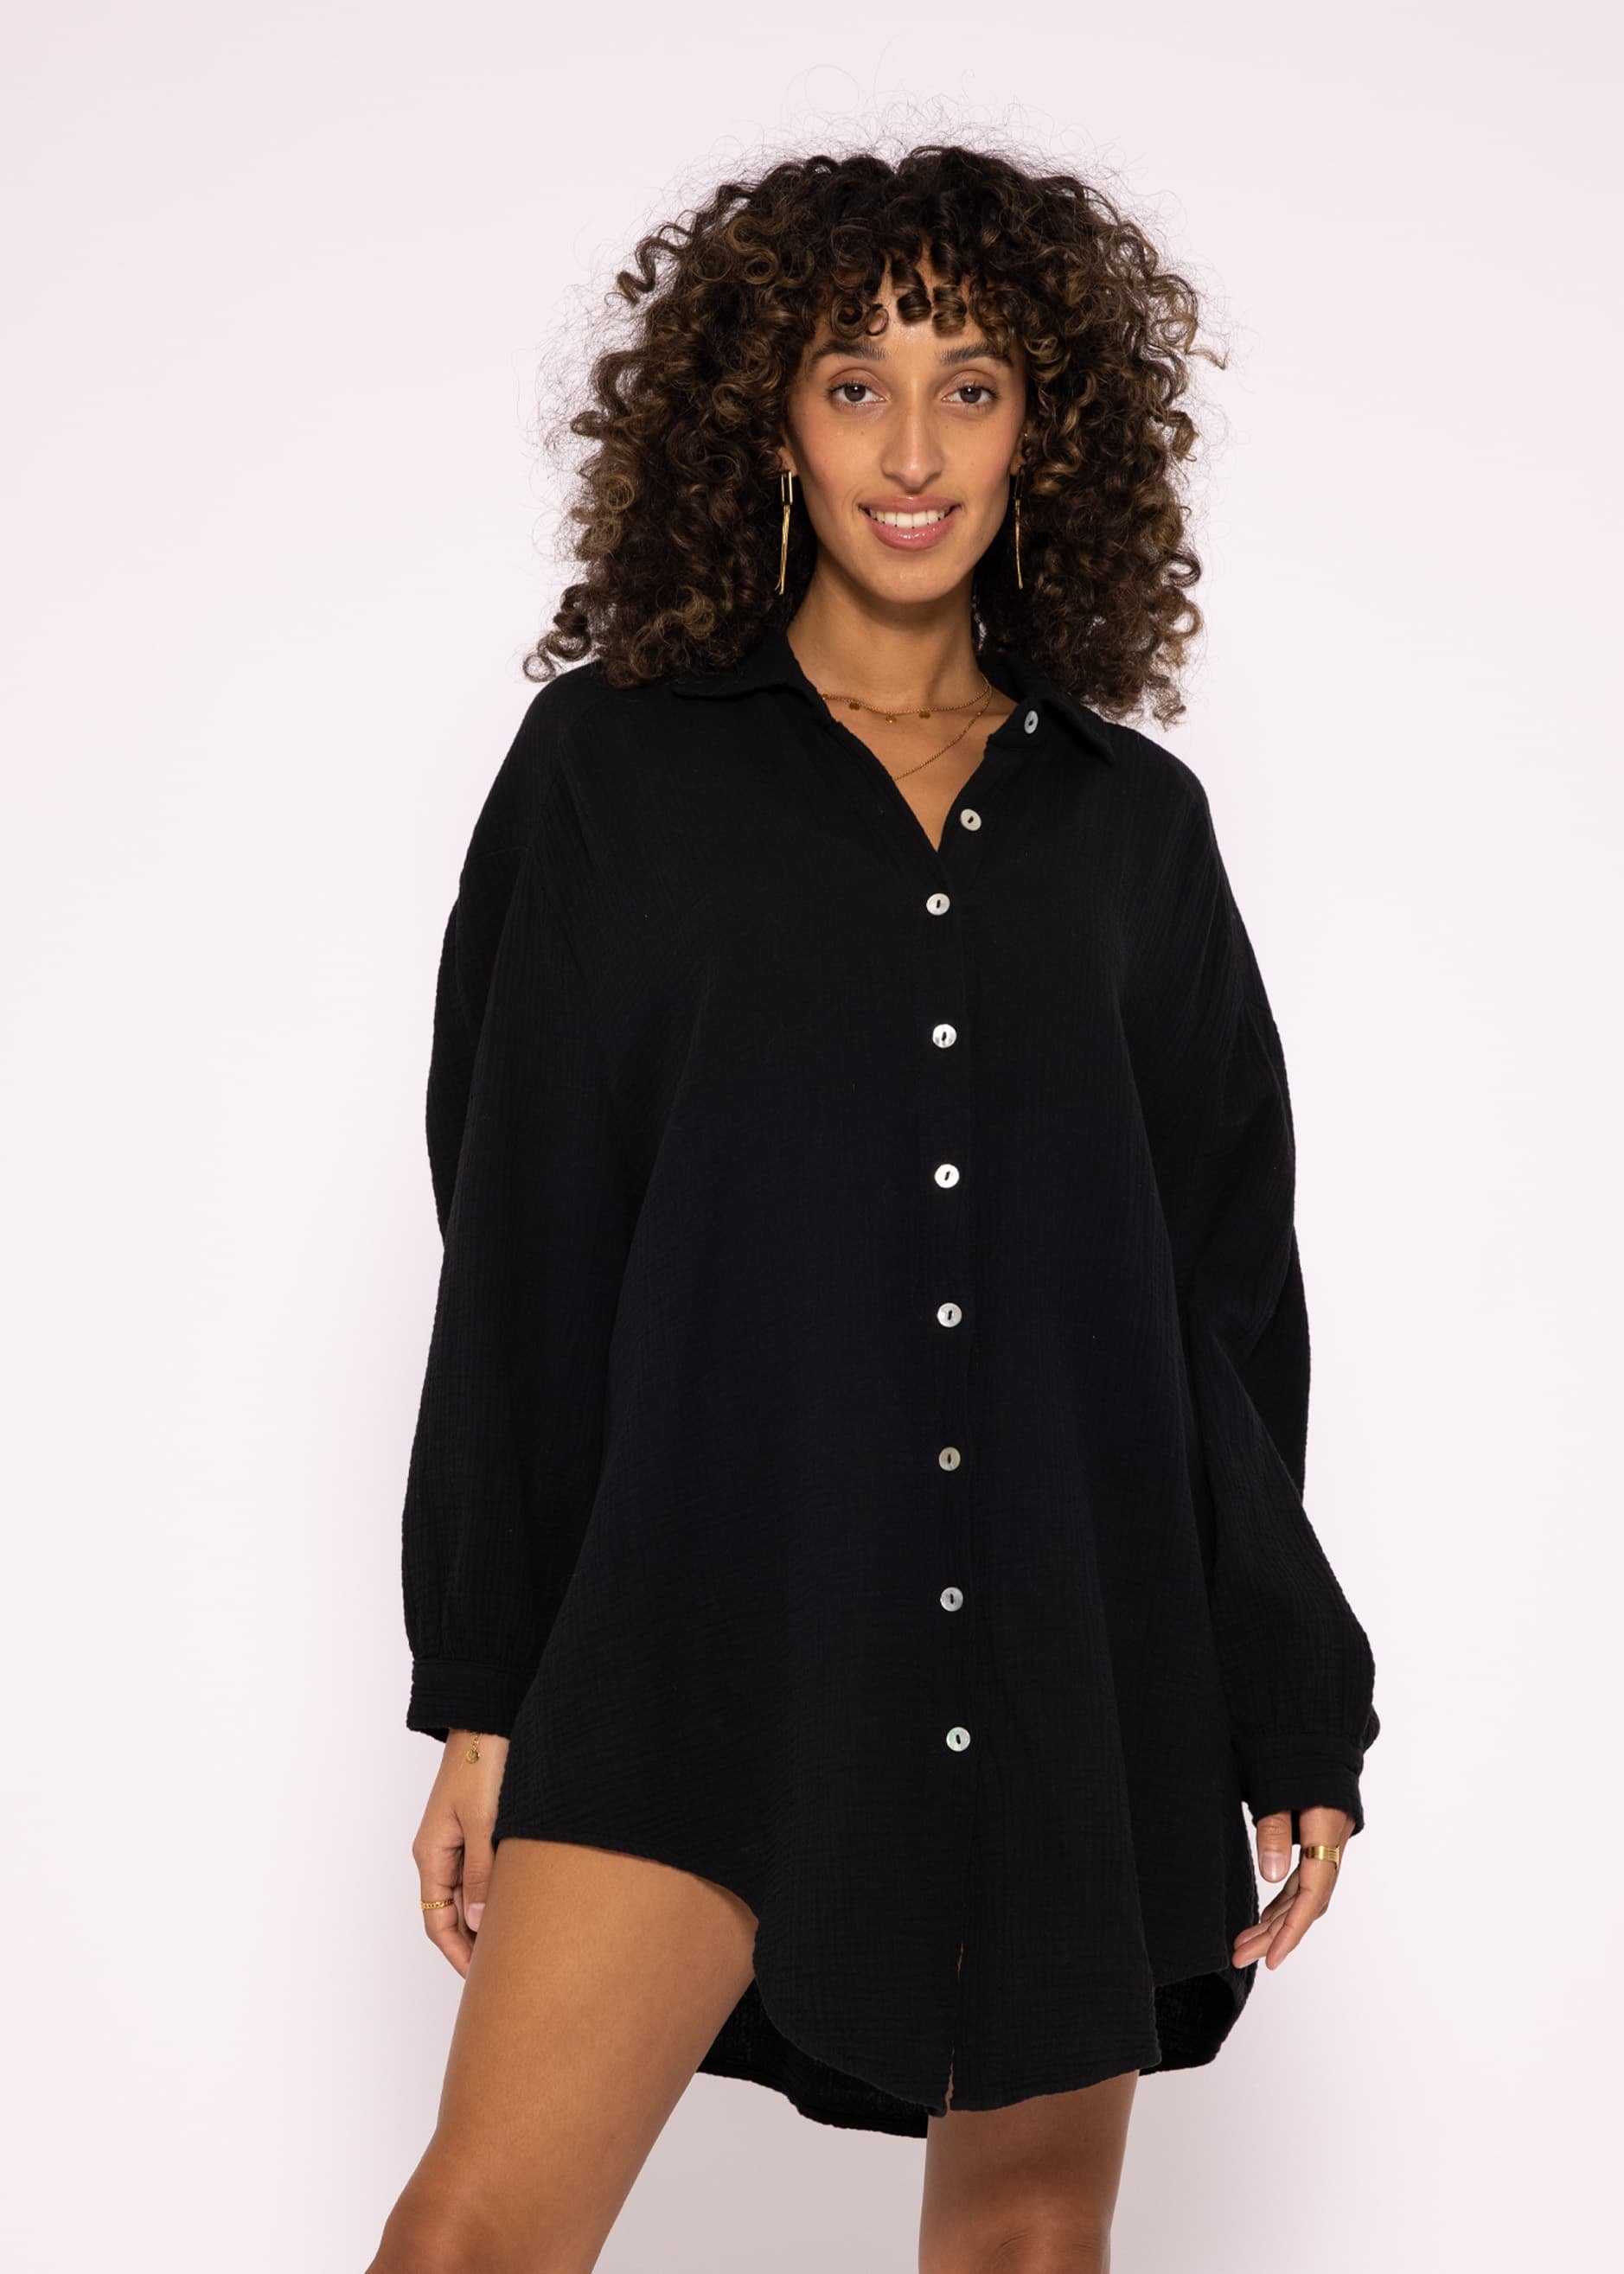 SASSYCLASSY Longbluse Oversize Musselin Bluse Damen Langarm Hemdbluse lang aus Baumwolle mit V-Ausschnitt, One Size (Gr. 36-48) Schwarz